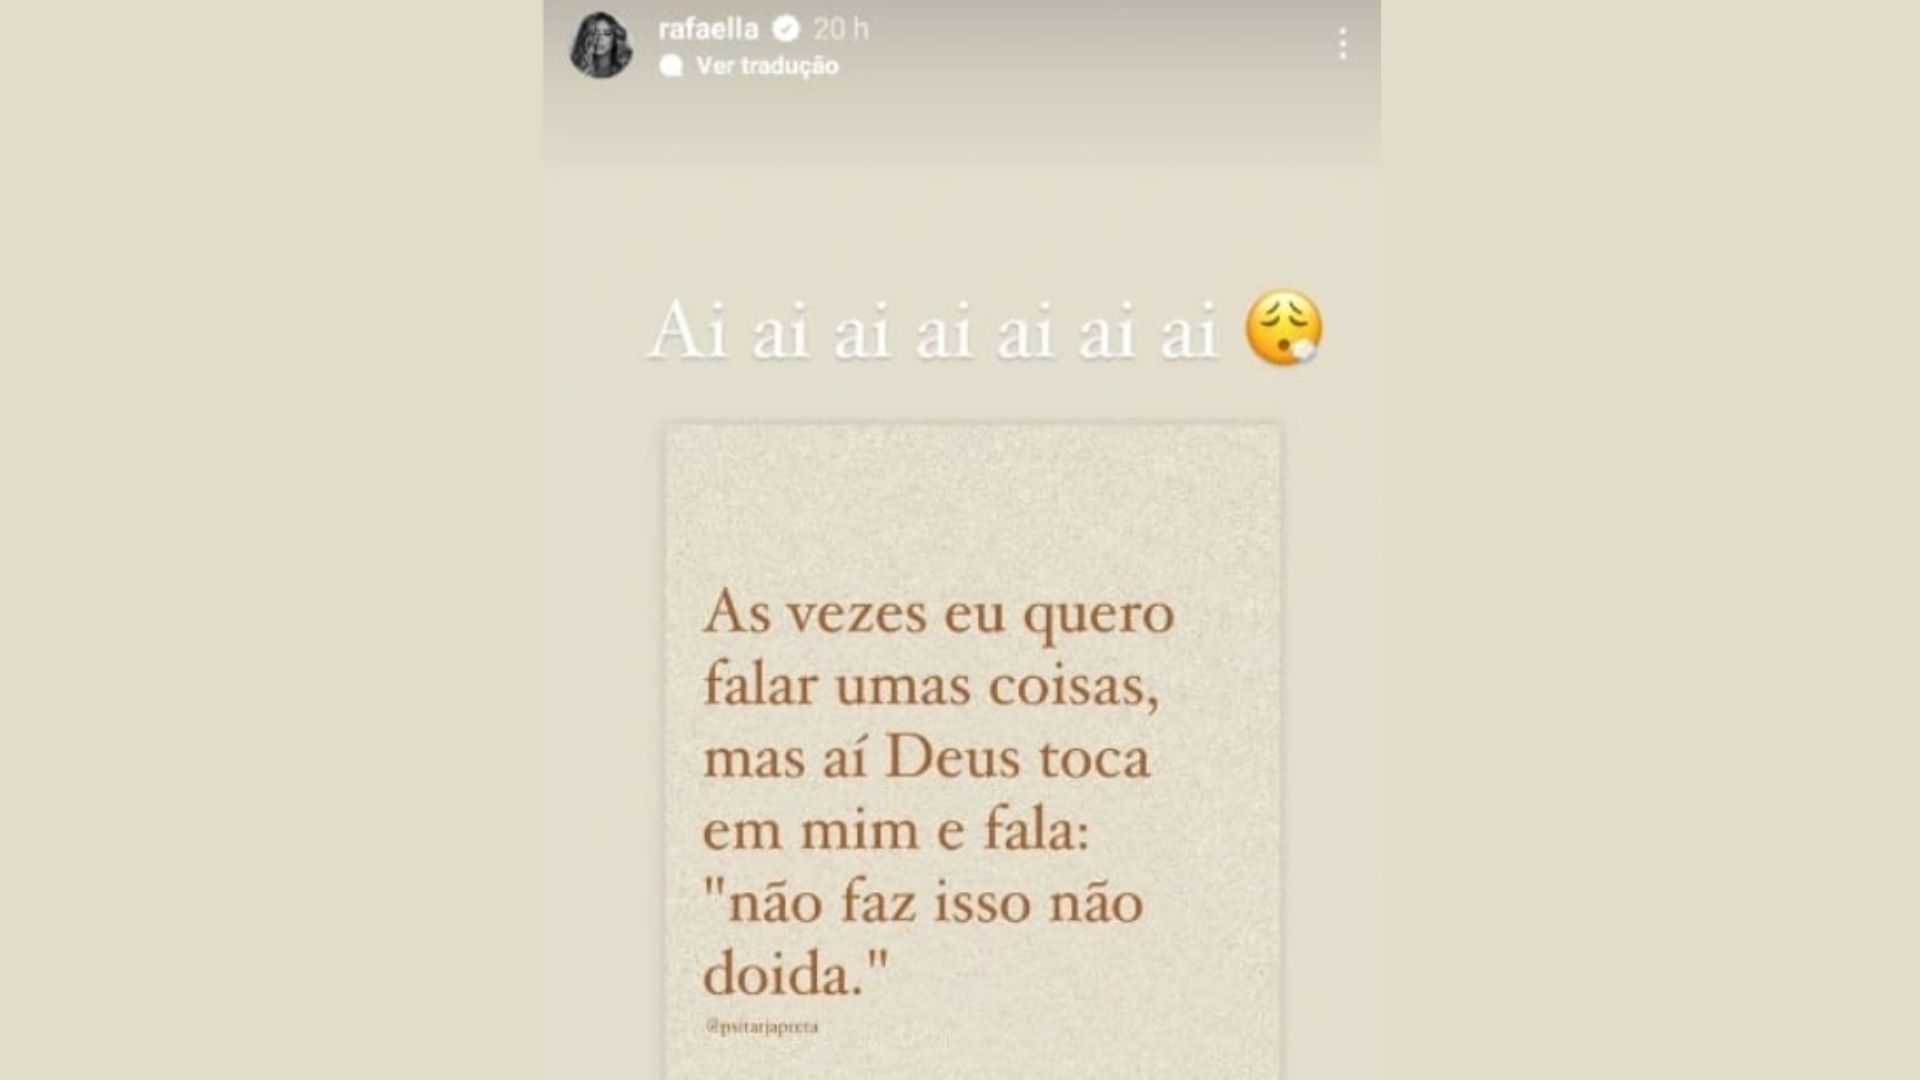 Rafaella Santos via stories - Reprodução/Instagram